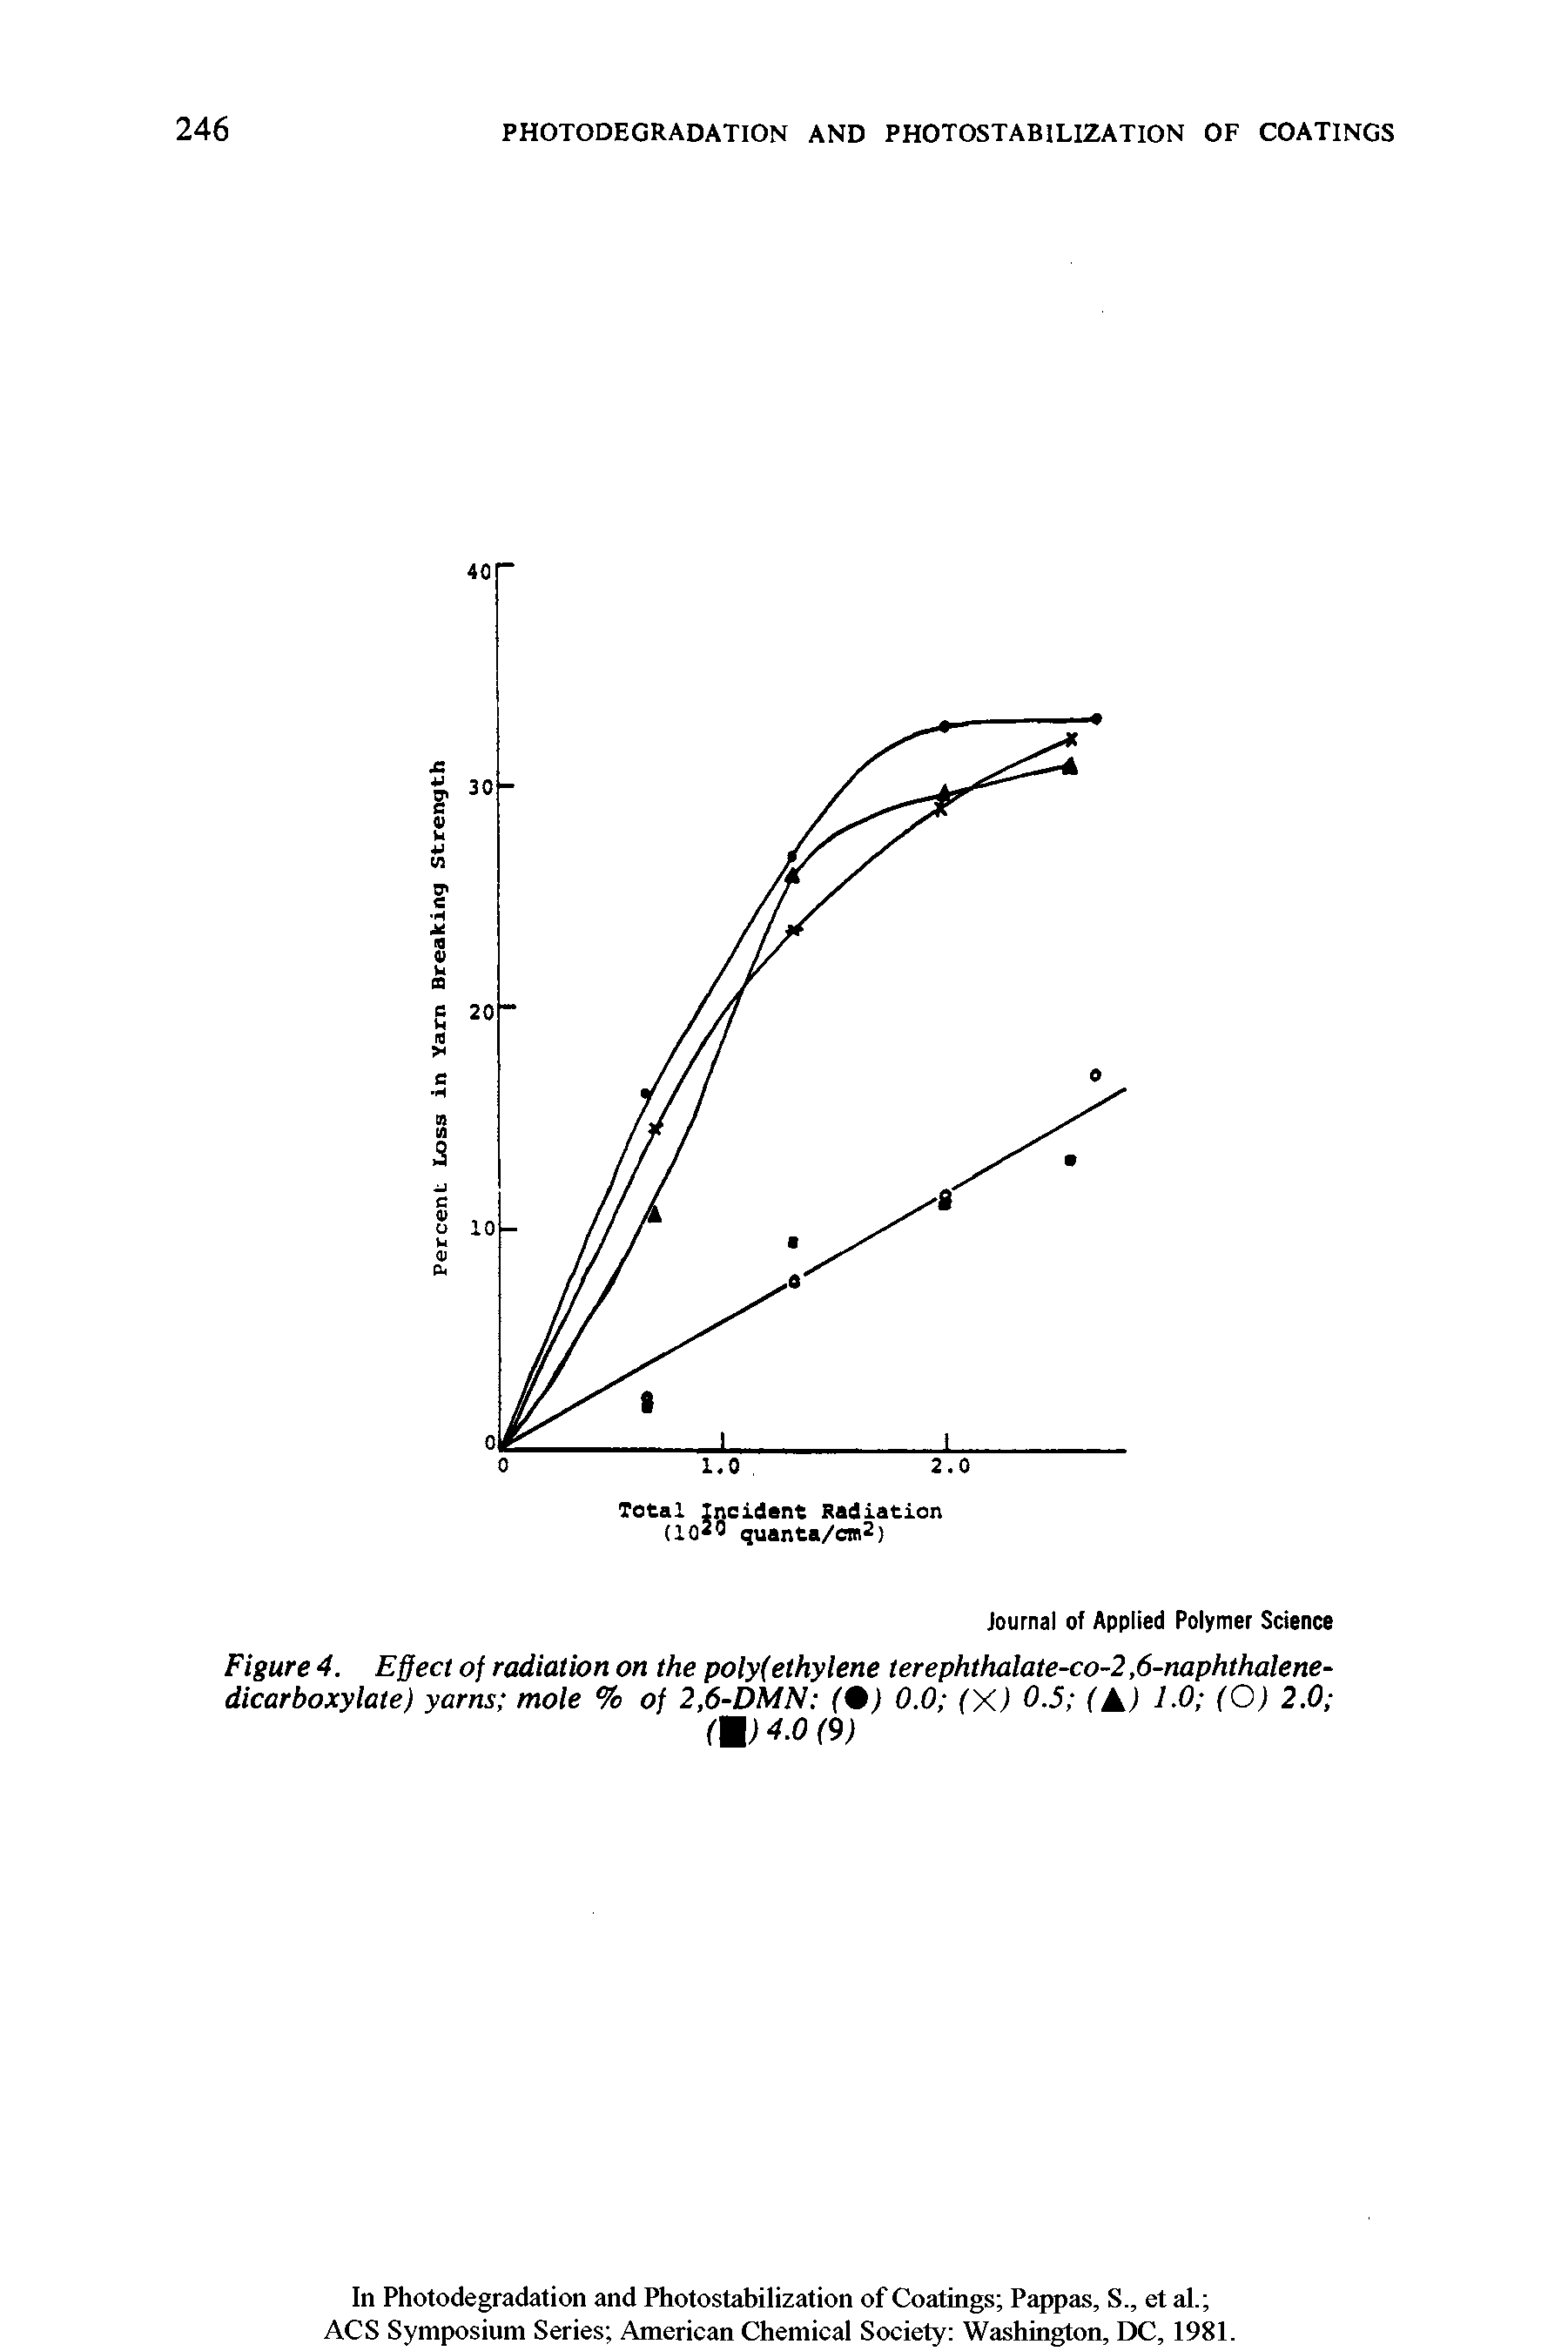 Figure 4. Effect of radiation on the poly(ethylene terephthalate-co-2,6-naphthalene-dicarboxylate) yarns mole % of 2,6-DMN (%) 0.0 (X) 0.5 fA) 1-0 (O) 2.0 ...